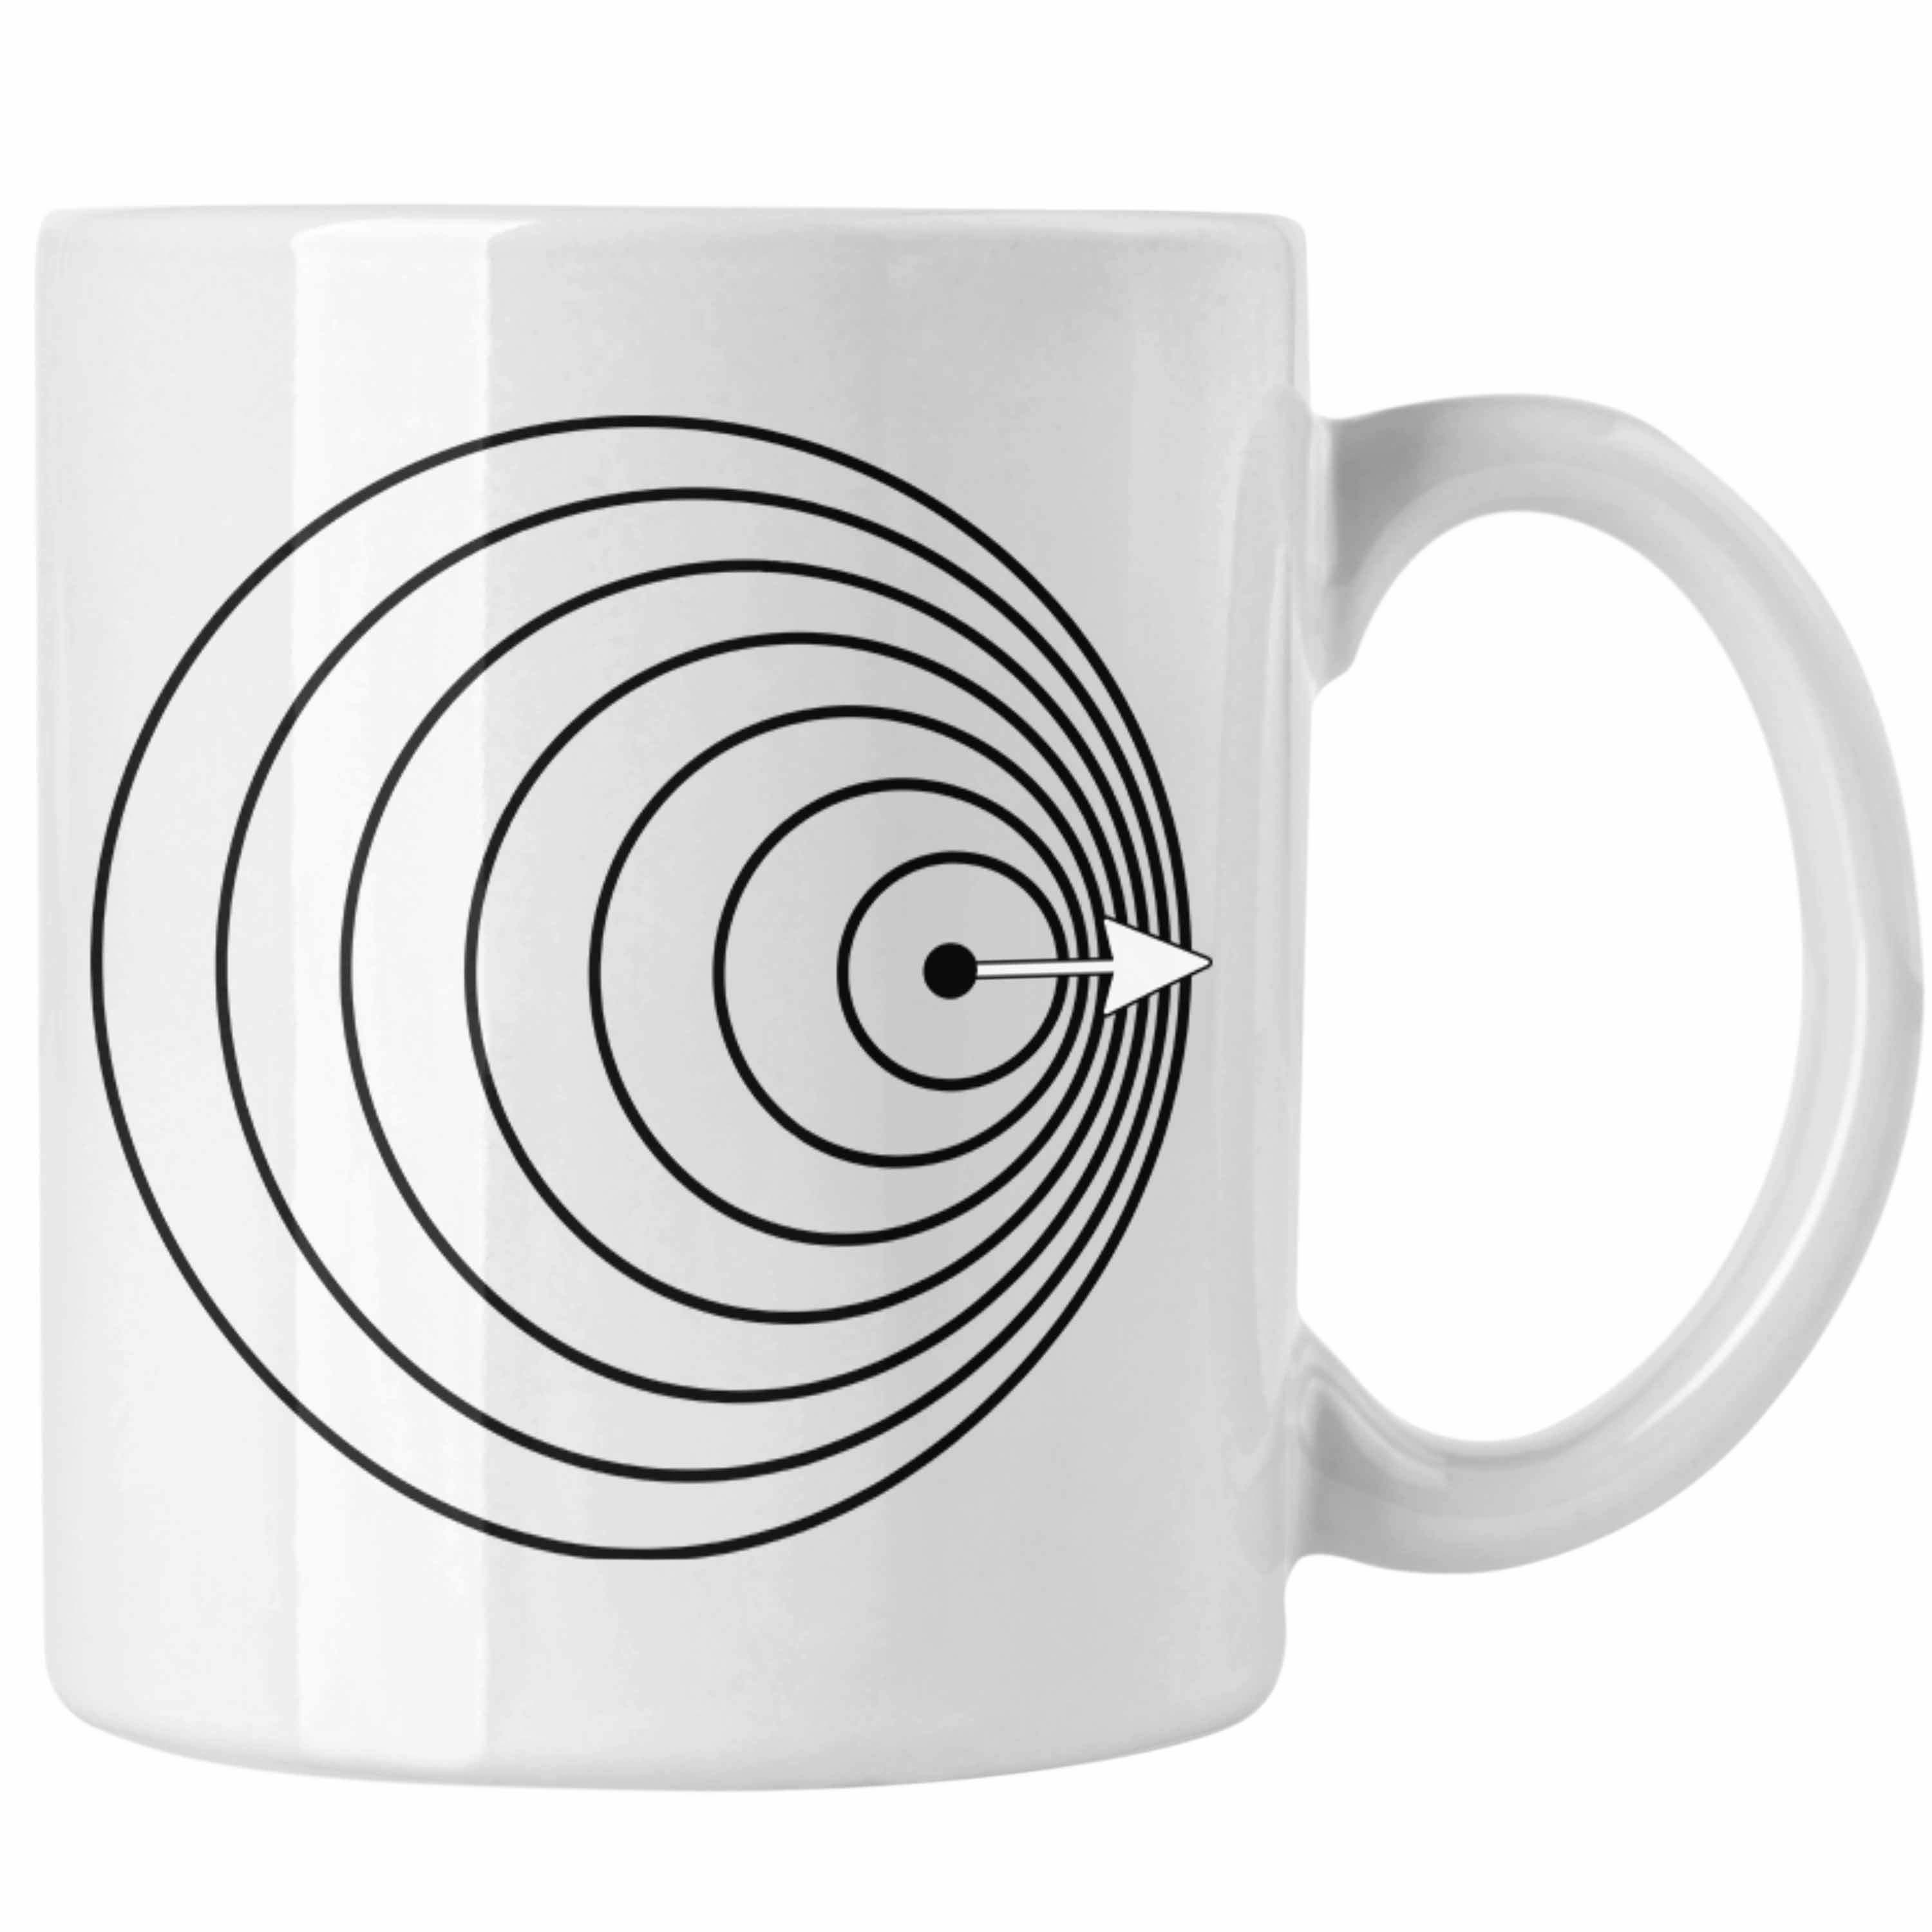 Geschenk Tasse Humor Phsyiker Effekt Tasse Nerds Tasse Doppler Physik Mathe Trendation Weiss